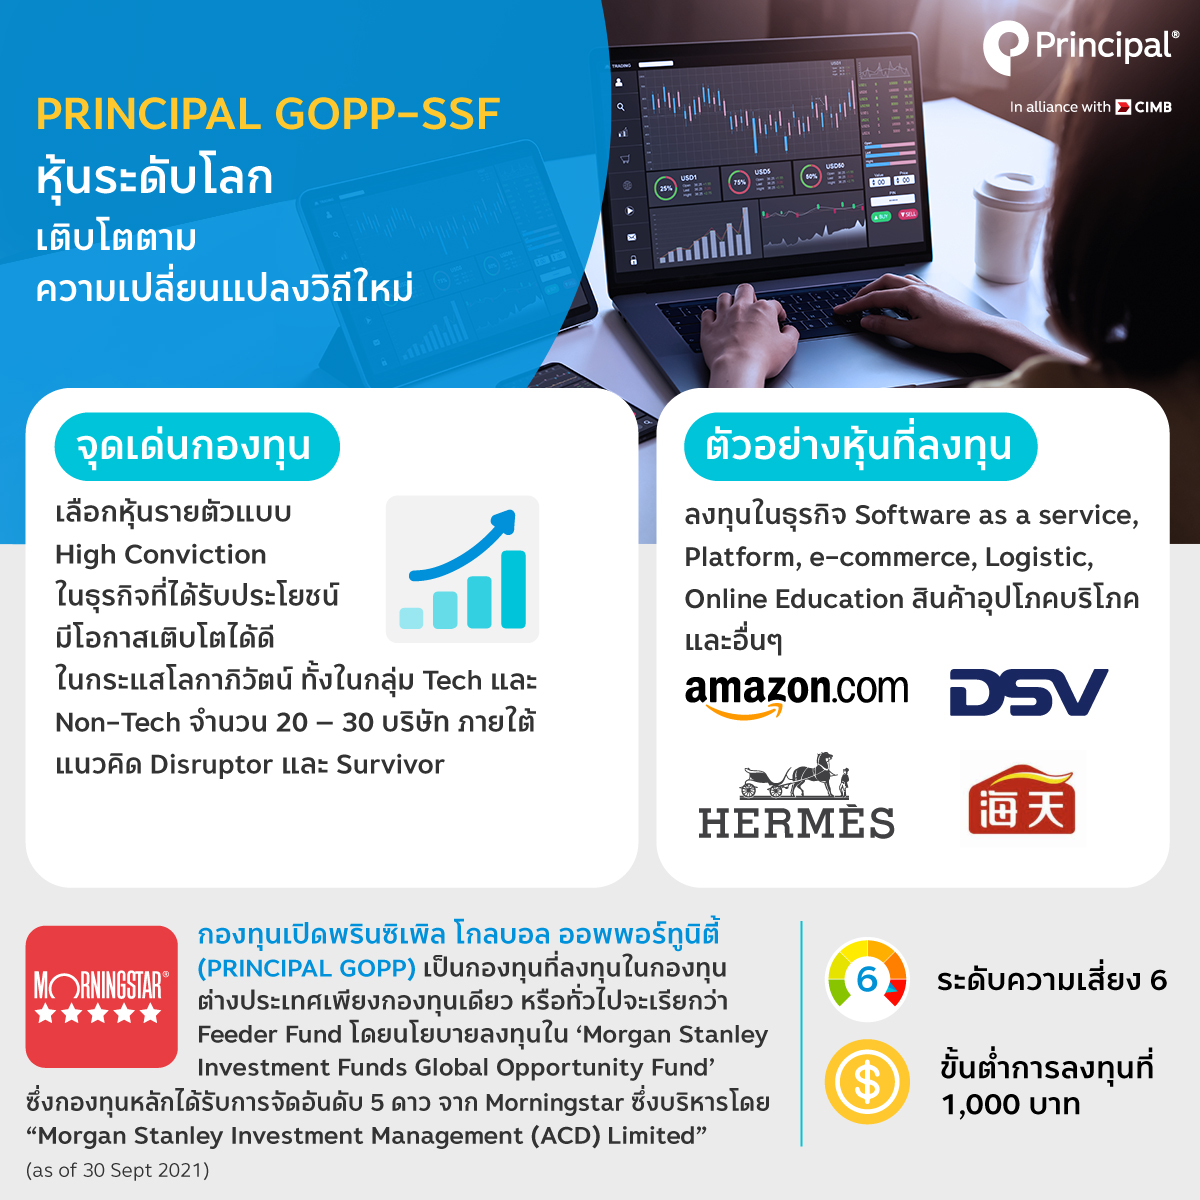 SSF (PRINCIPAL GOPP-SSF)